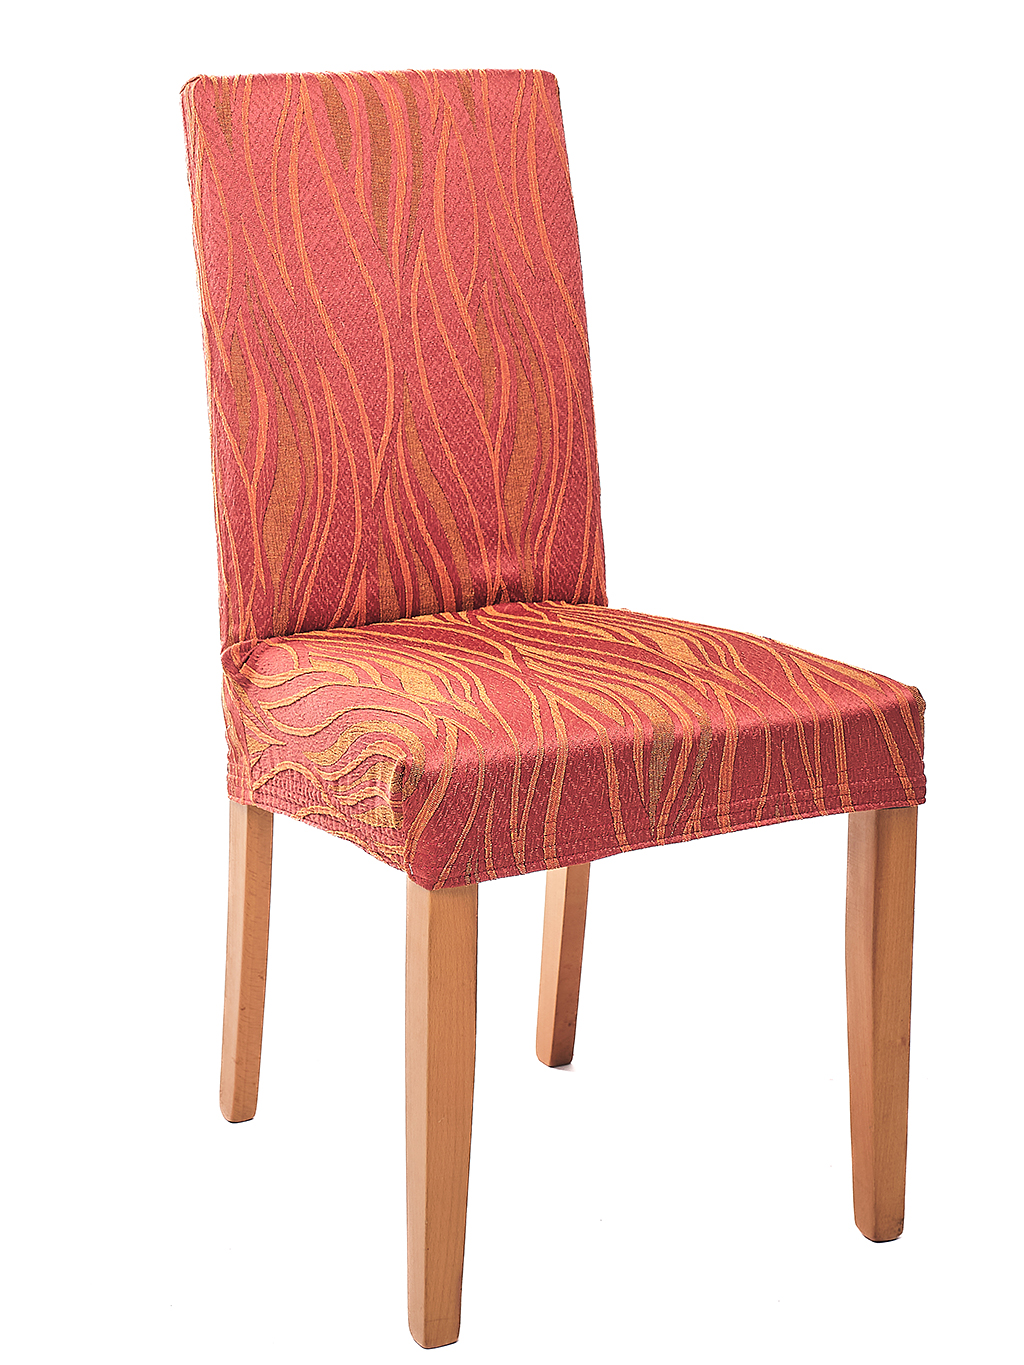 Komashop Potah na židli IRIS Barva: Oranžová